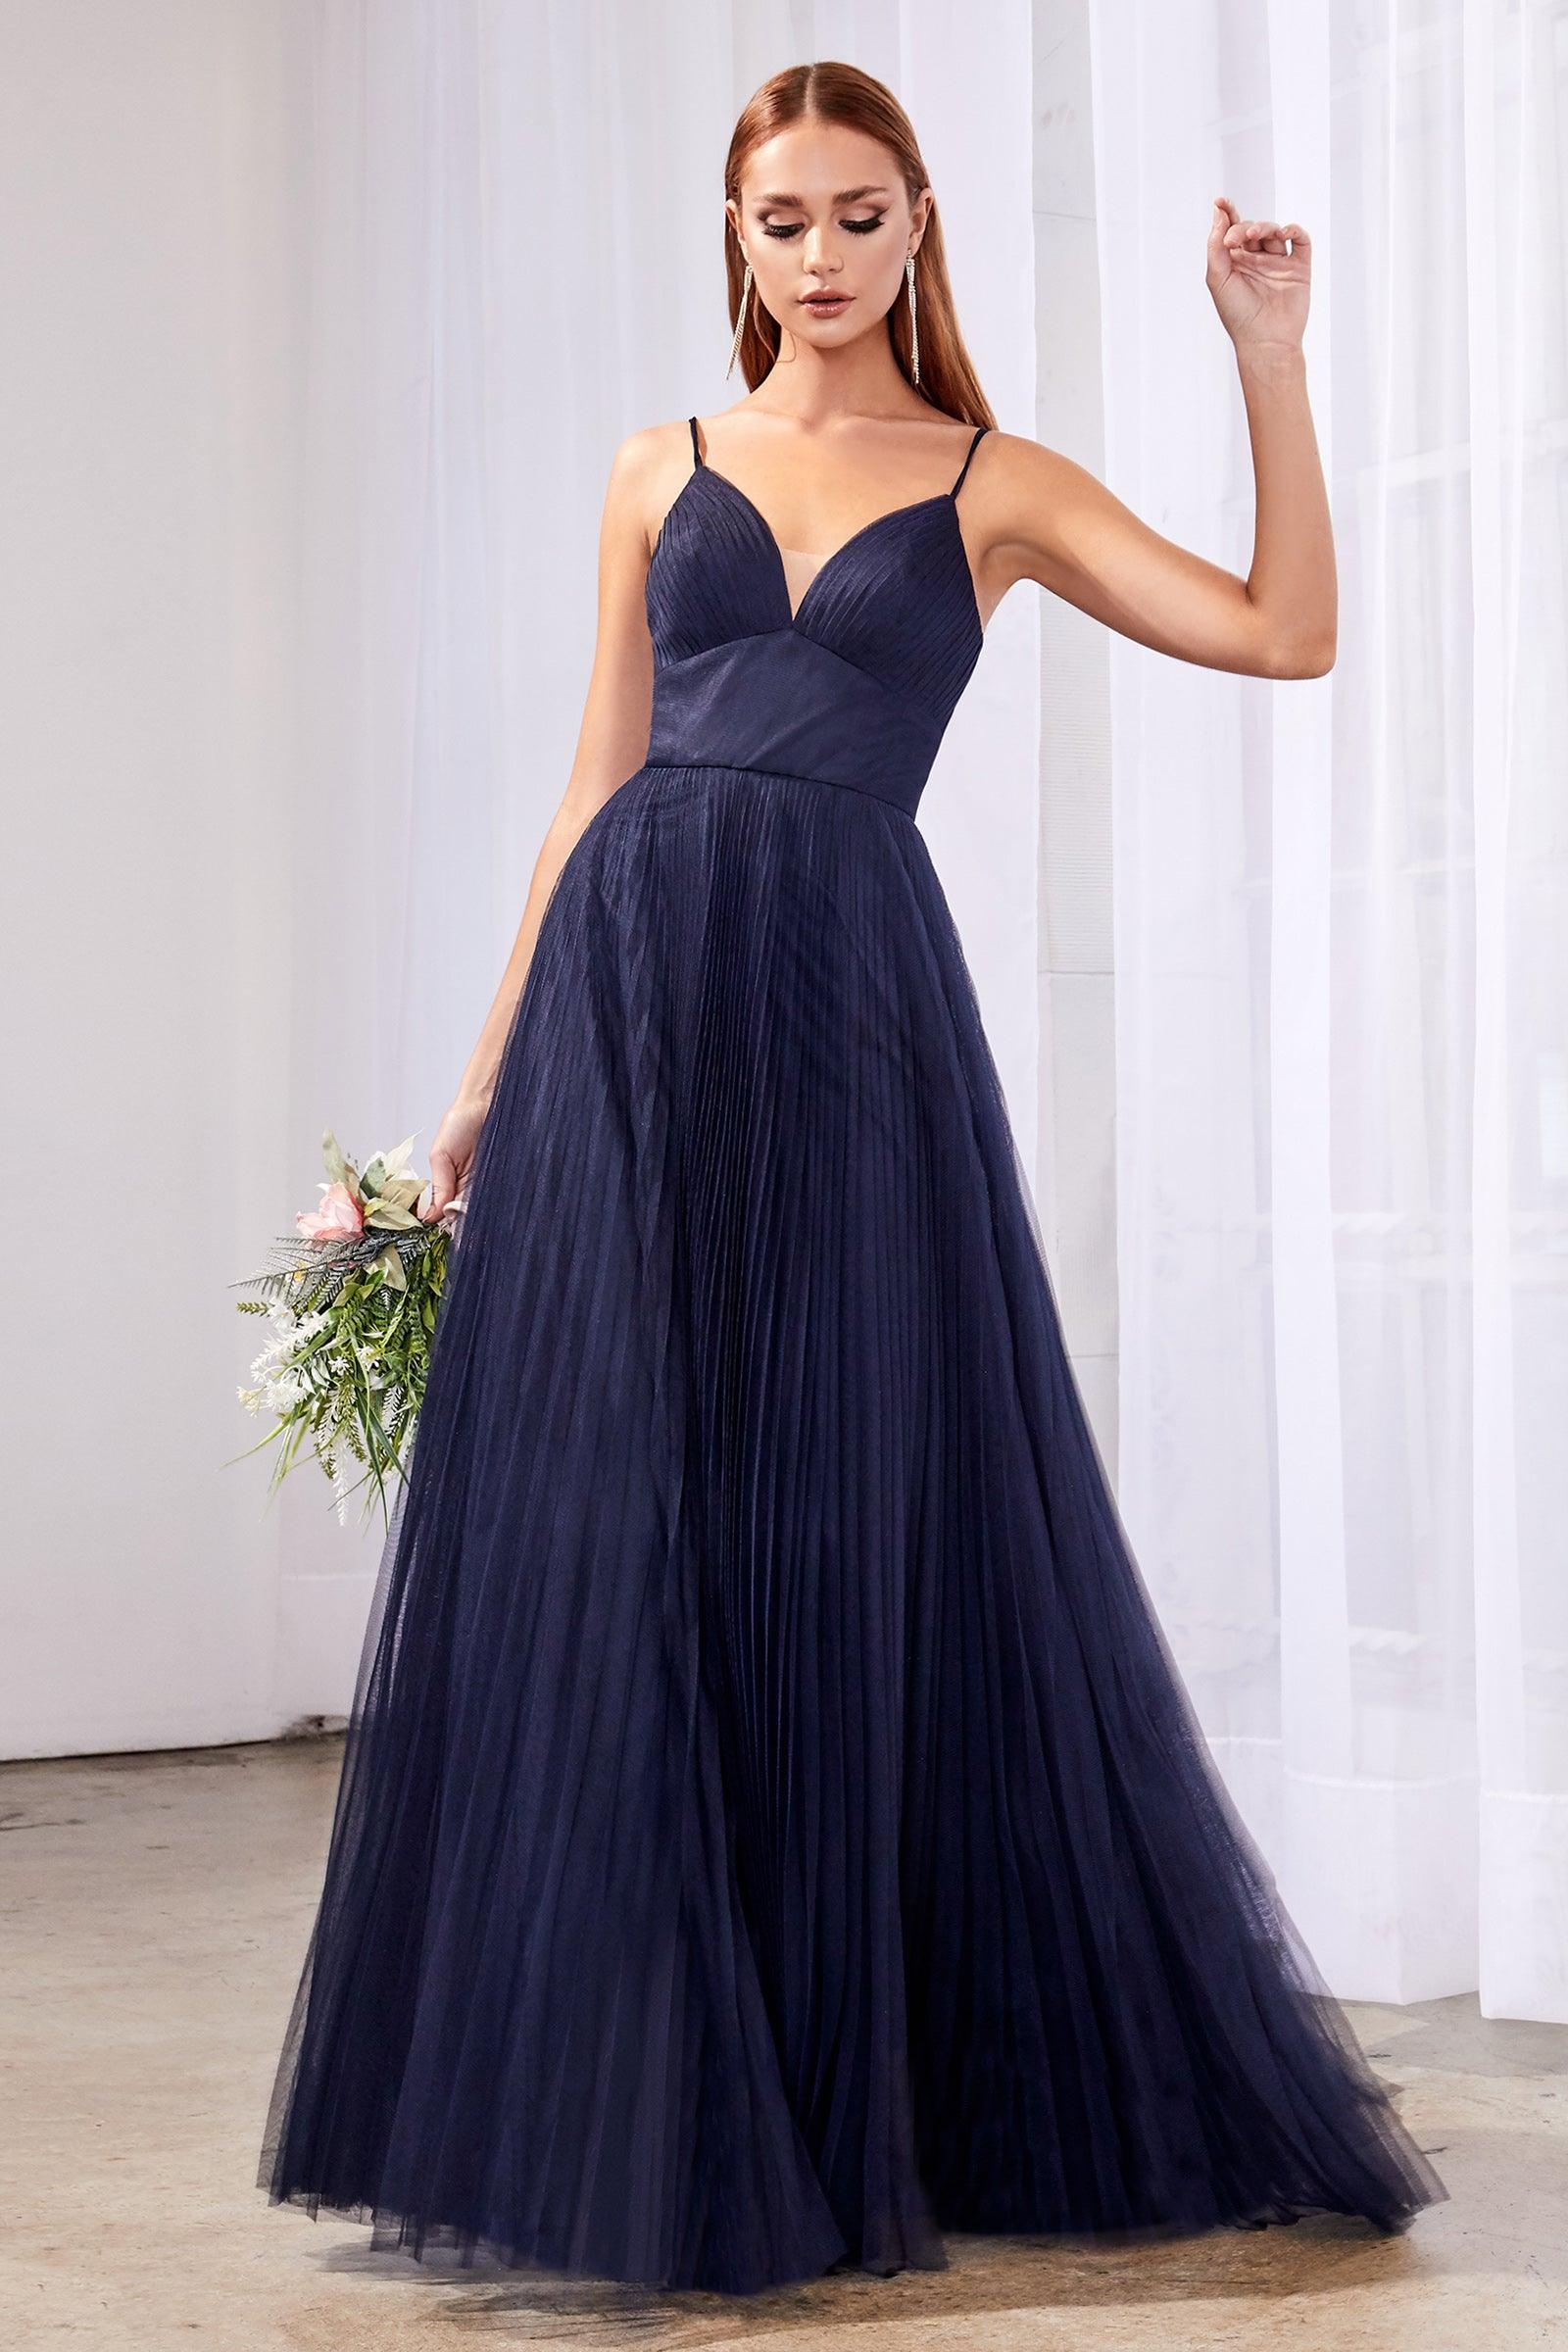 A-Line Long Formal Dress - The Dress Outlet